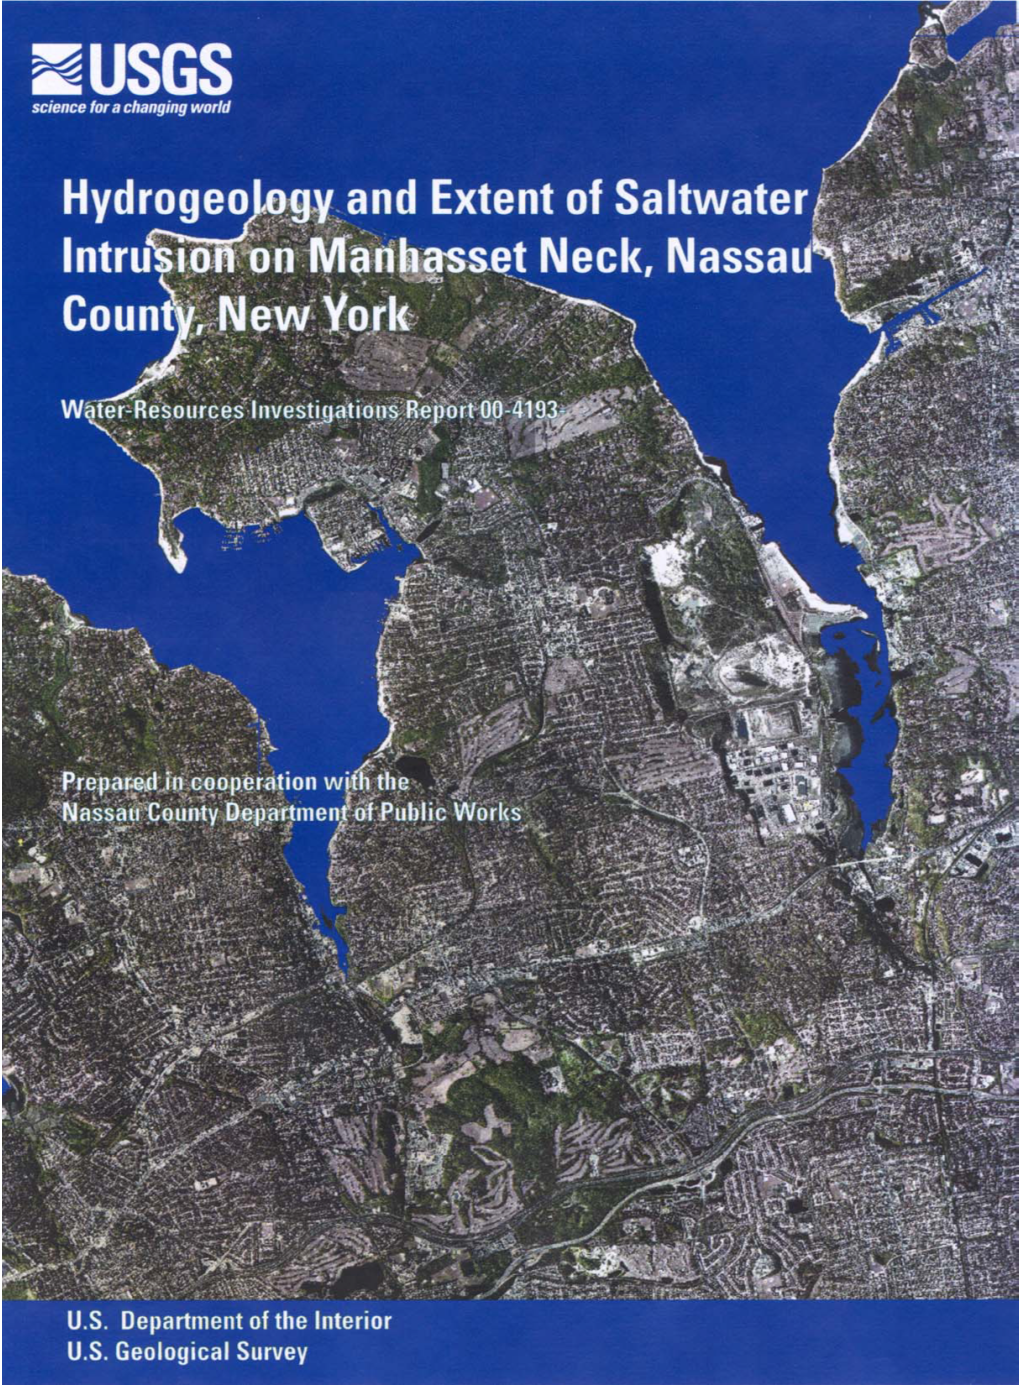 Hydrogeology and Extent of Saltwater Intrusion on Manhasset Neck, Nassau County, New York